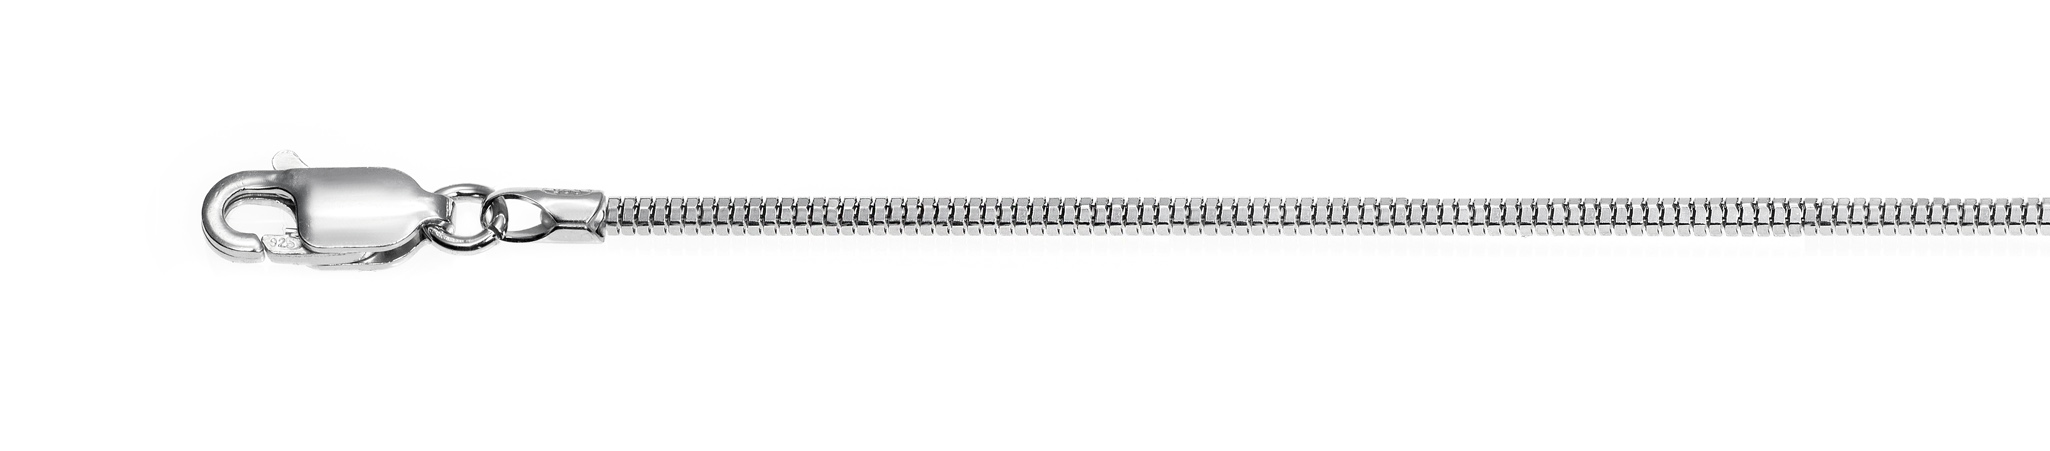 Ref.: 91016 - Diamond cut rhodium plated siver toro - Wide 1.6